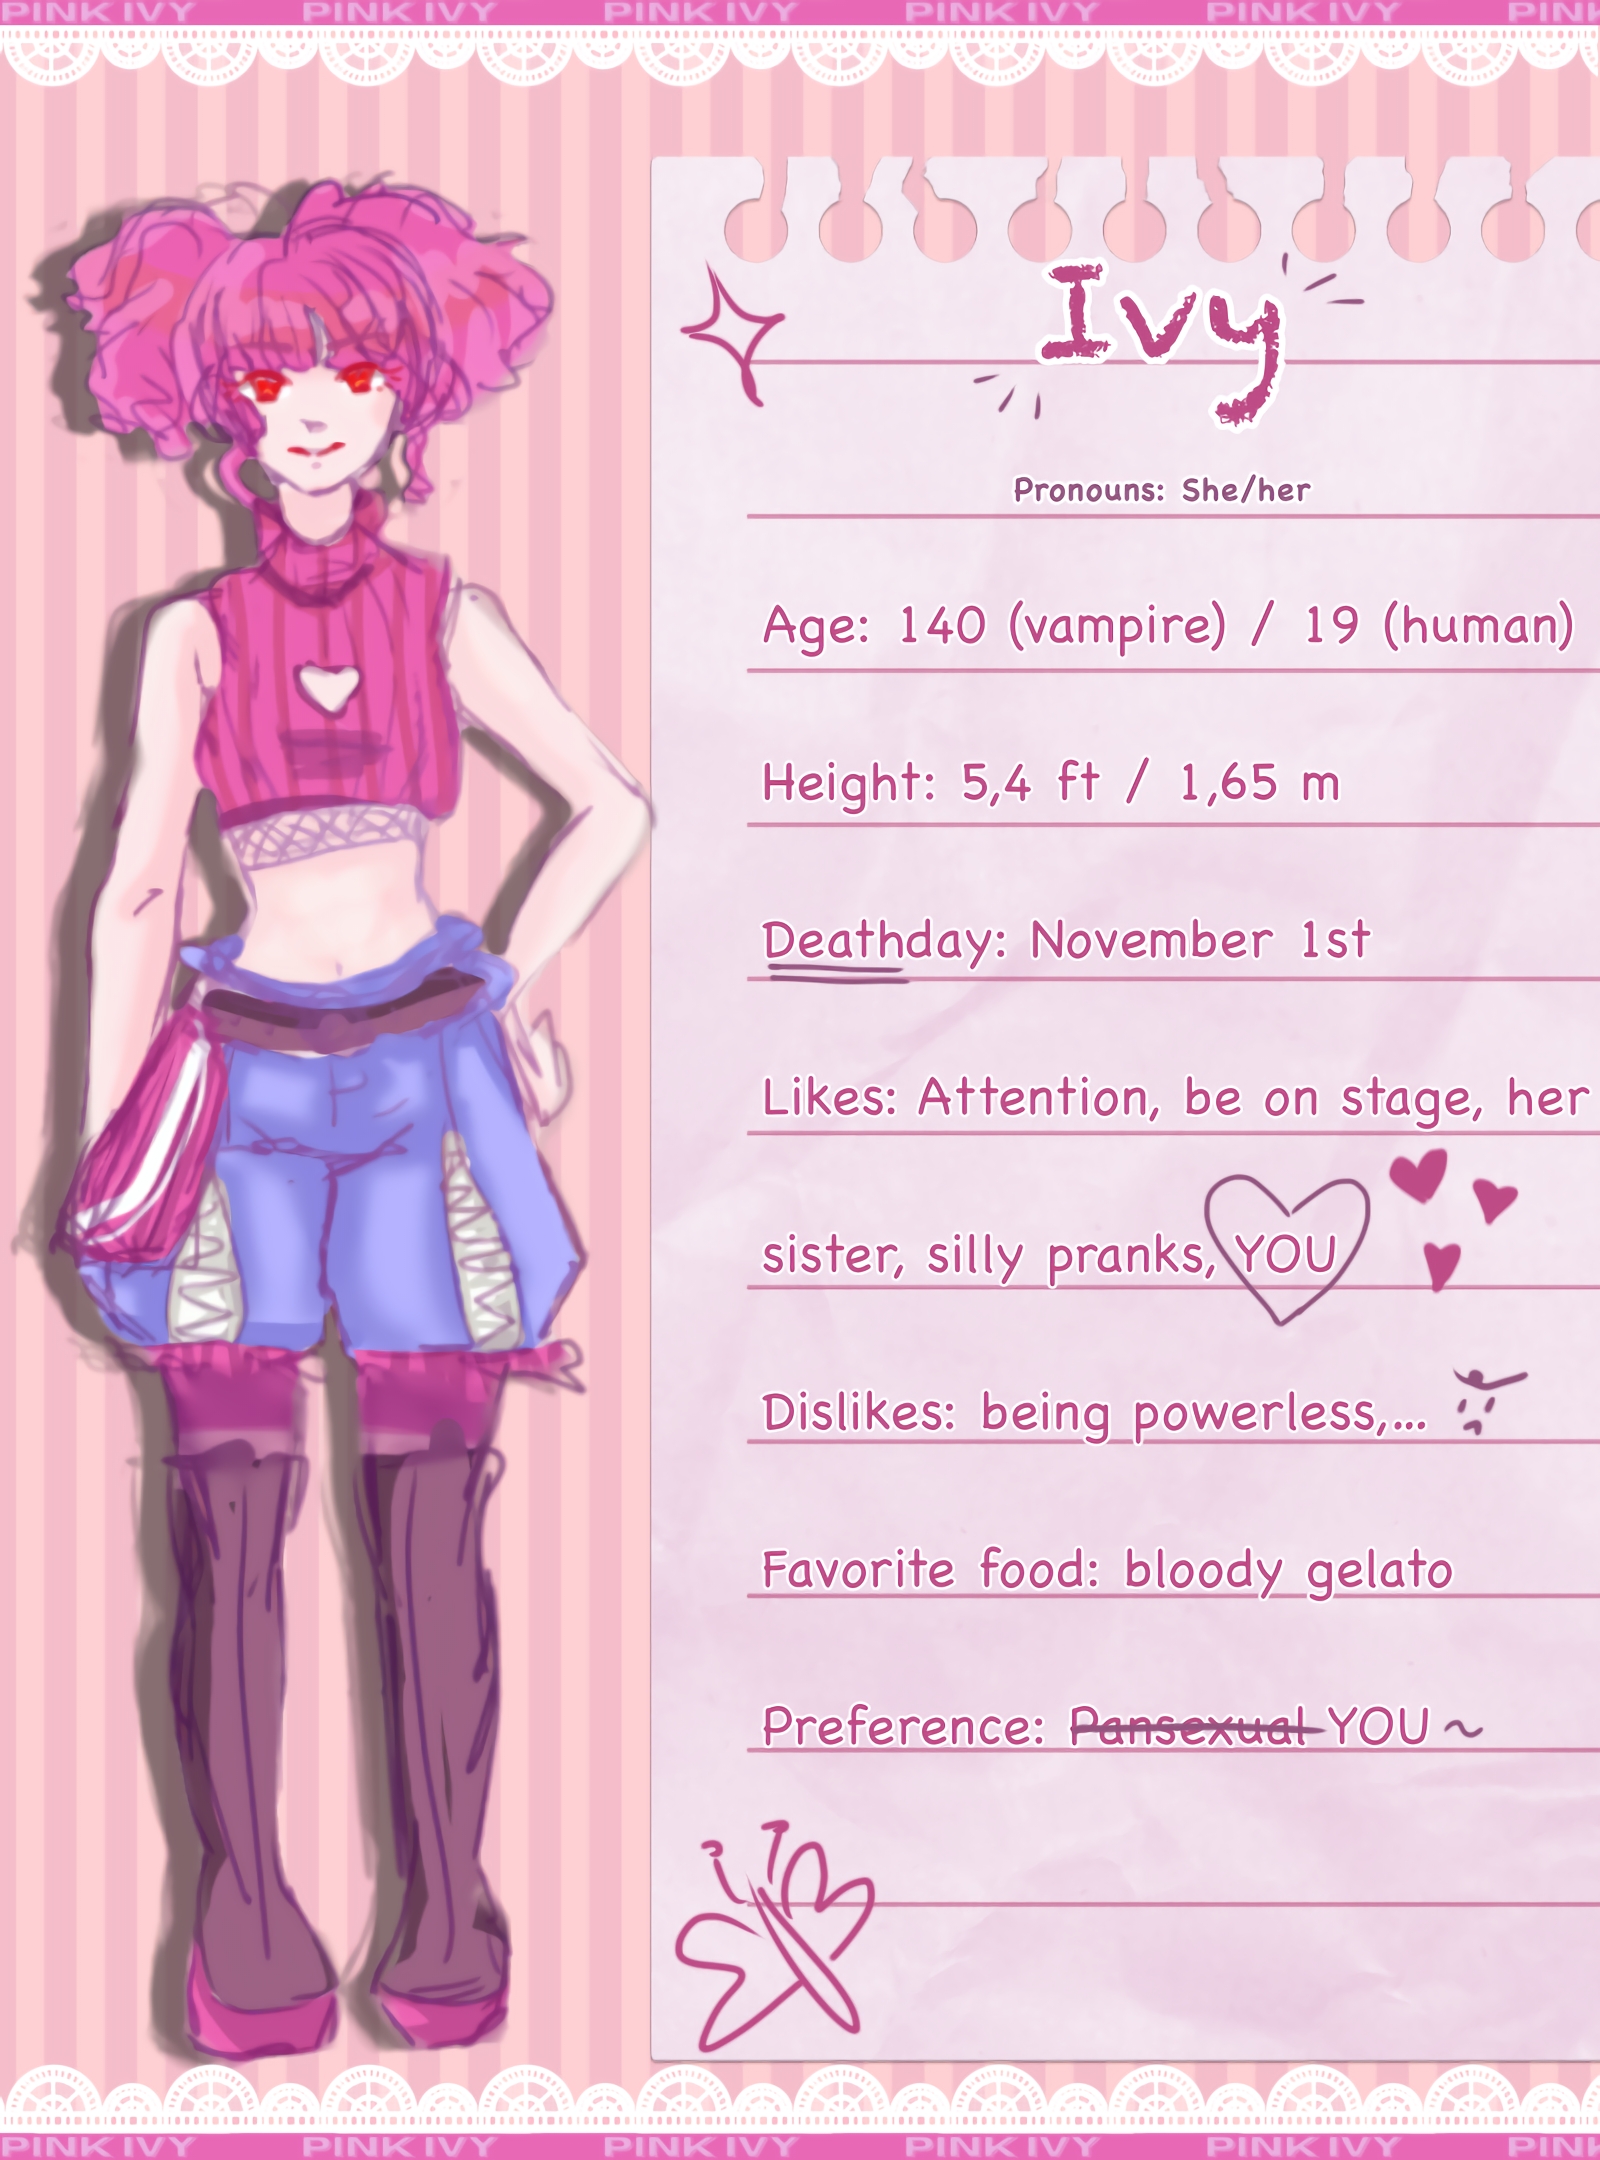 Ivy’s character sheet